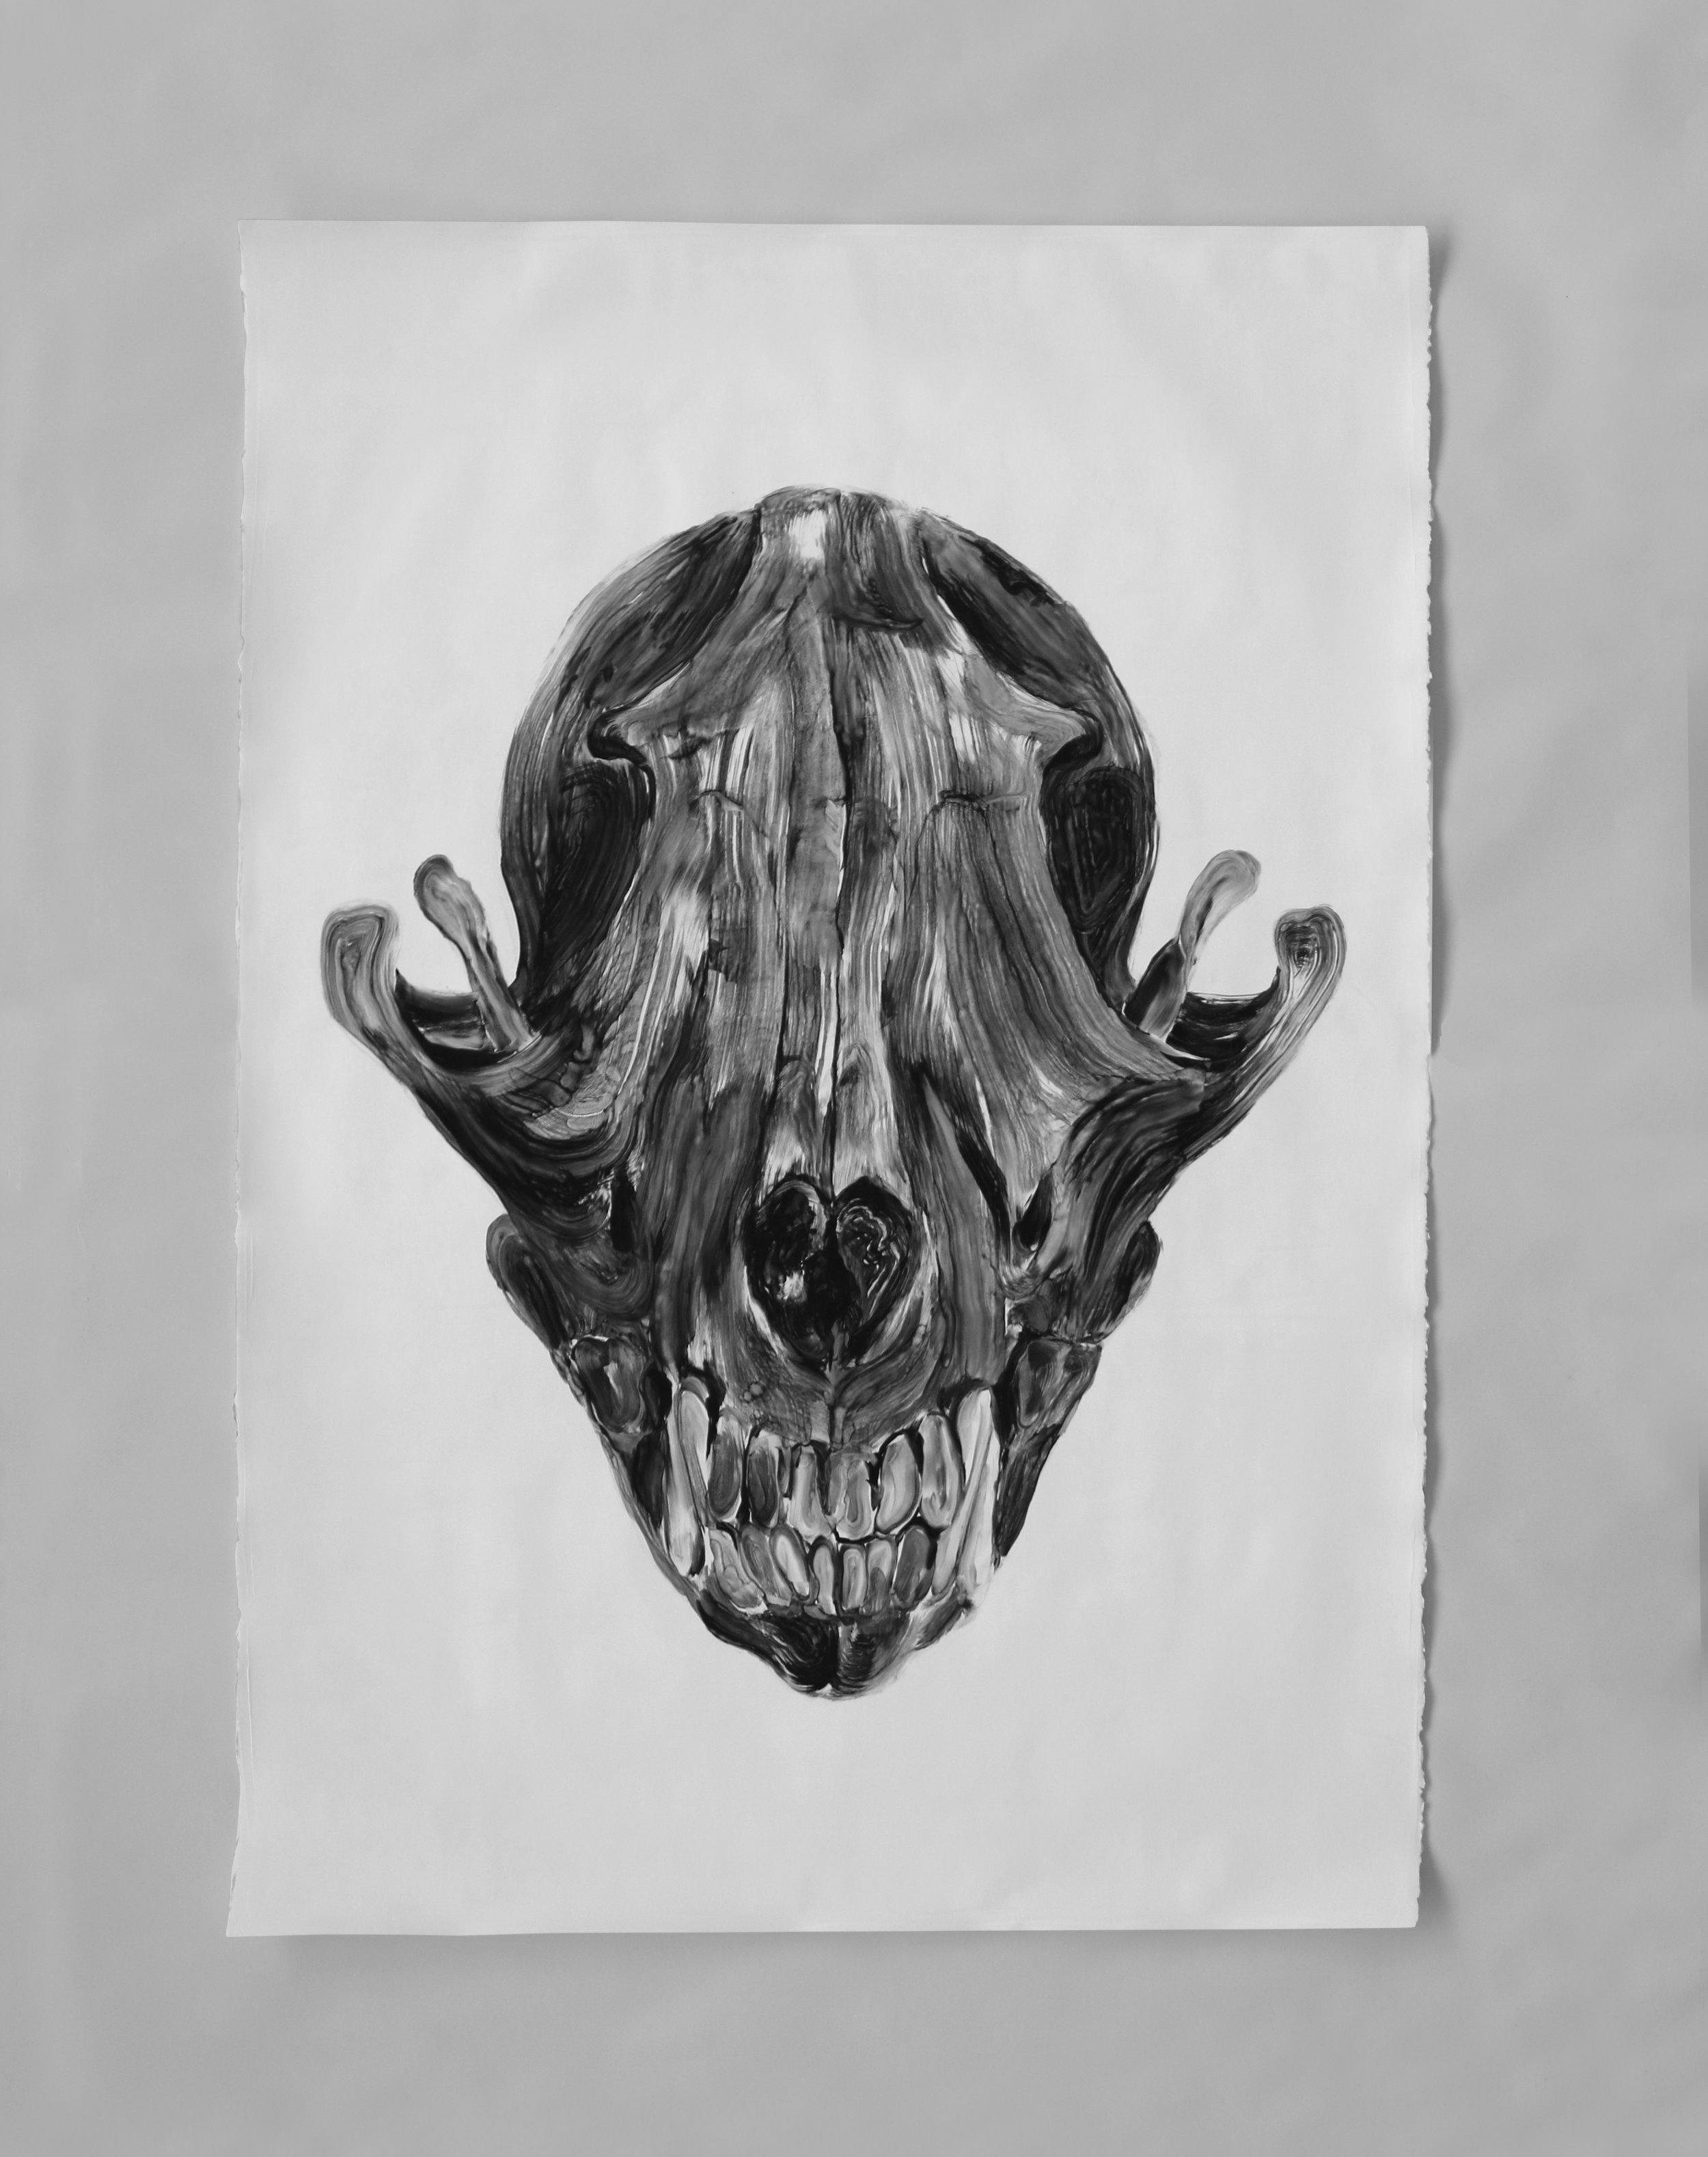  Crâne de renard/ Fox skull  Huile sur papier / Oil on paper  31 X 45 in /&nbsp;78 X 114 cm    